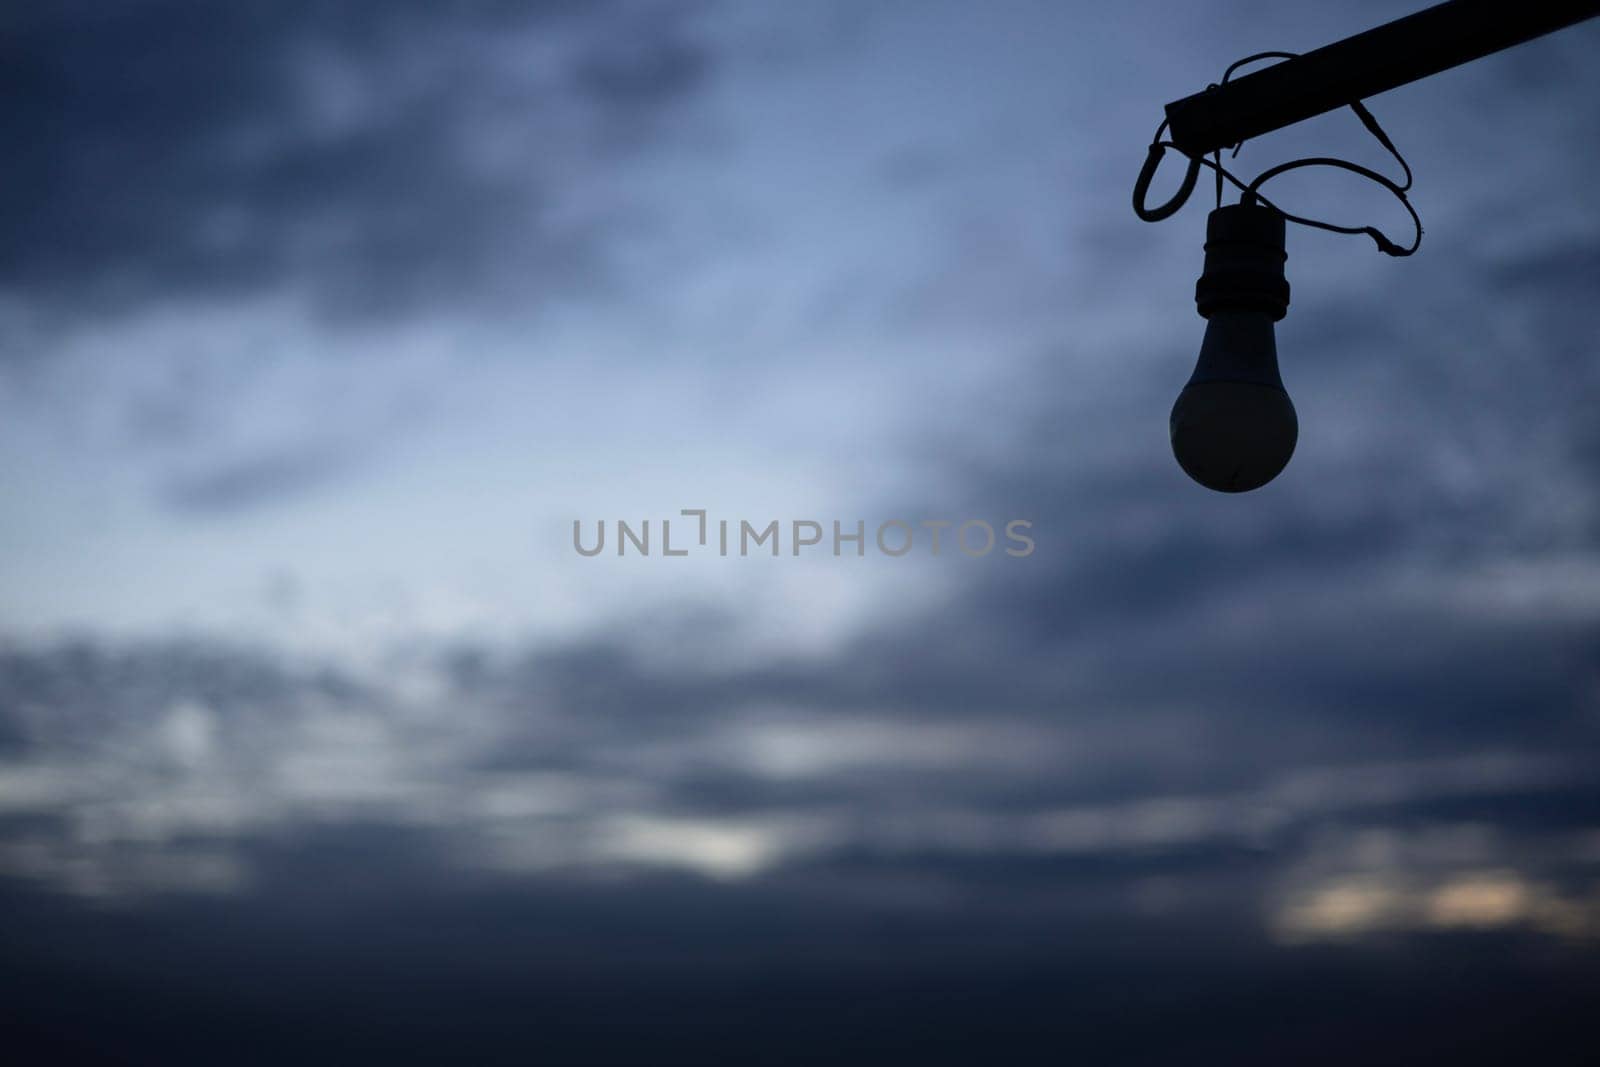 An image of an unlit light bulb against a  cloudy sky.